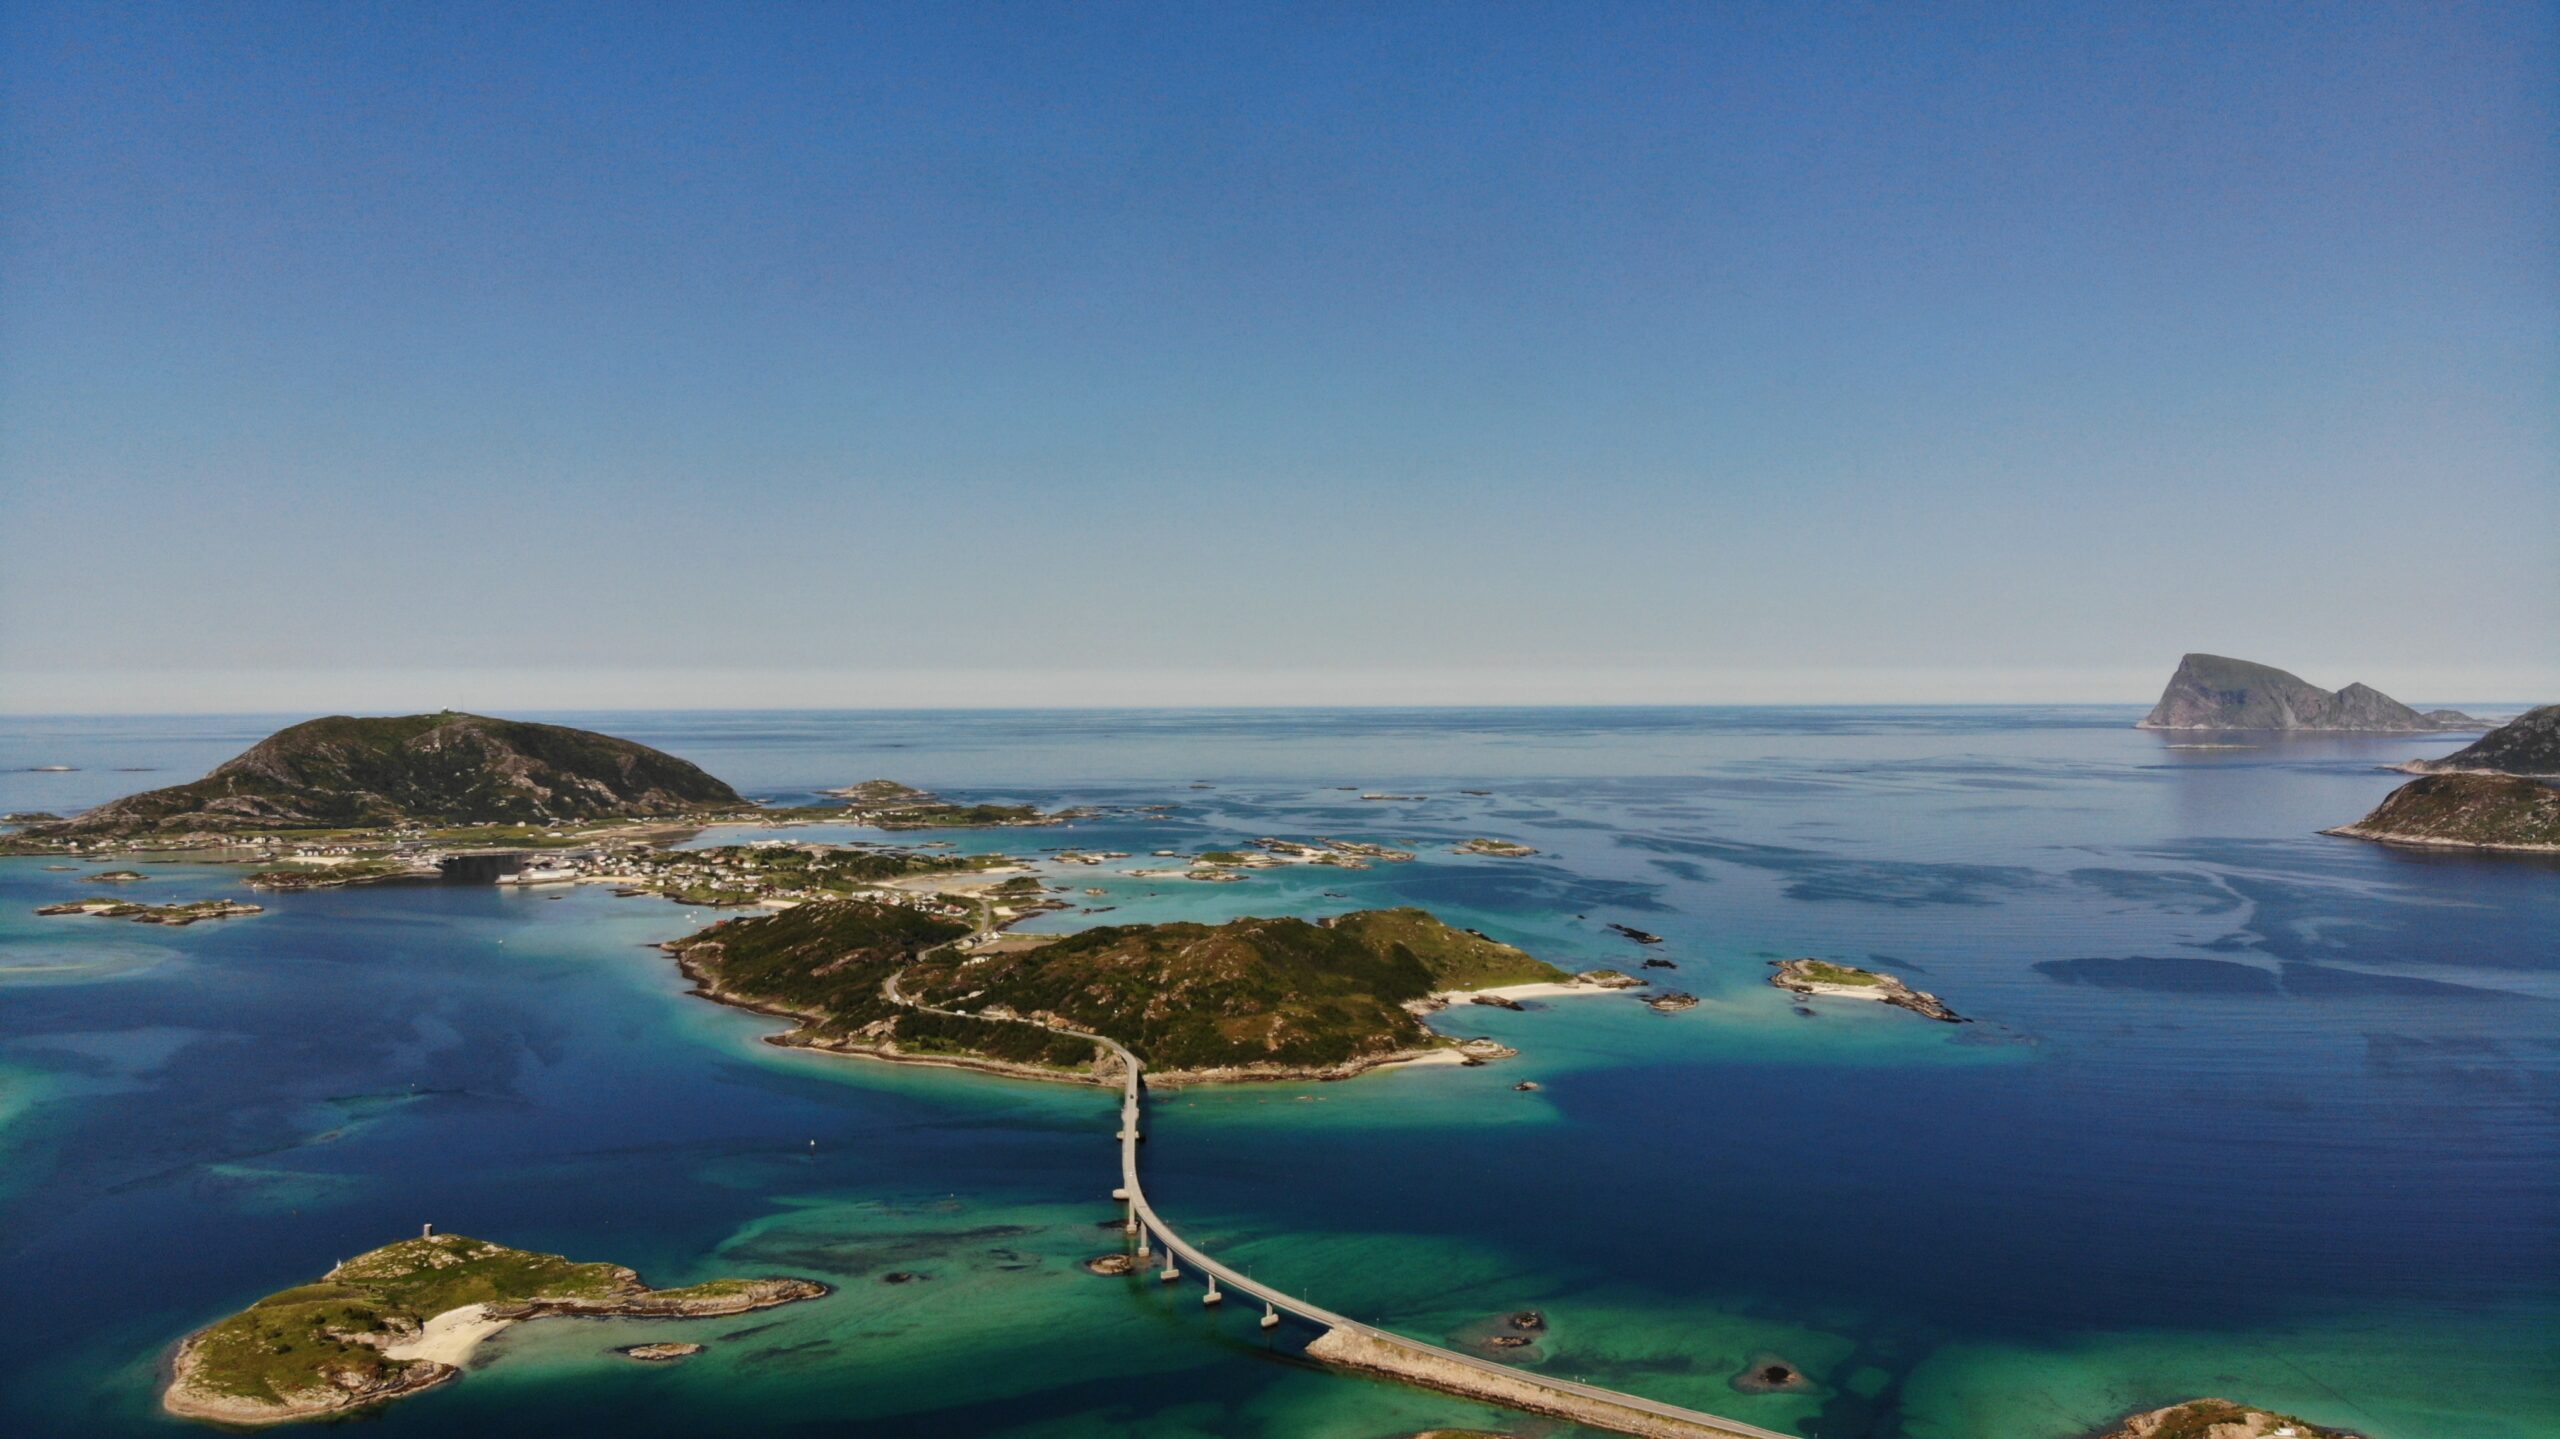 Sommarøy: The “Summer Island”